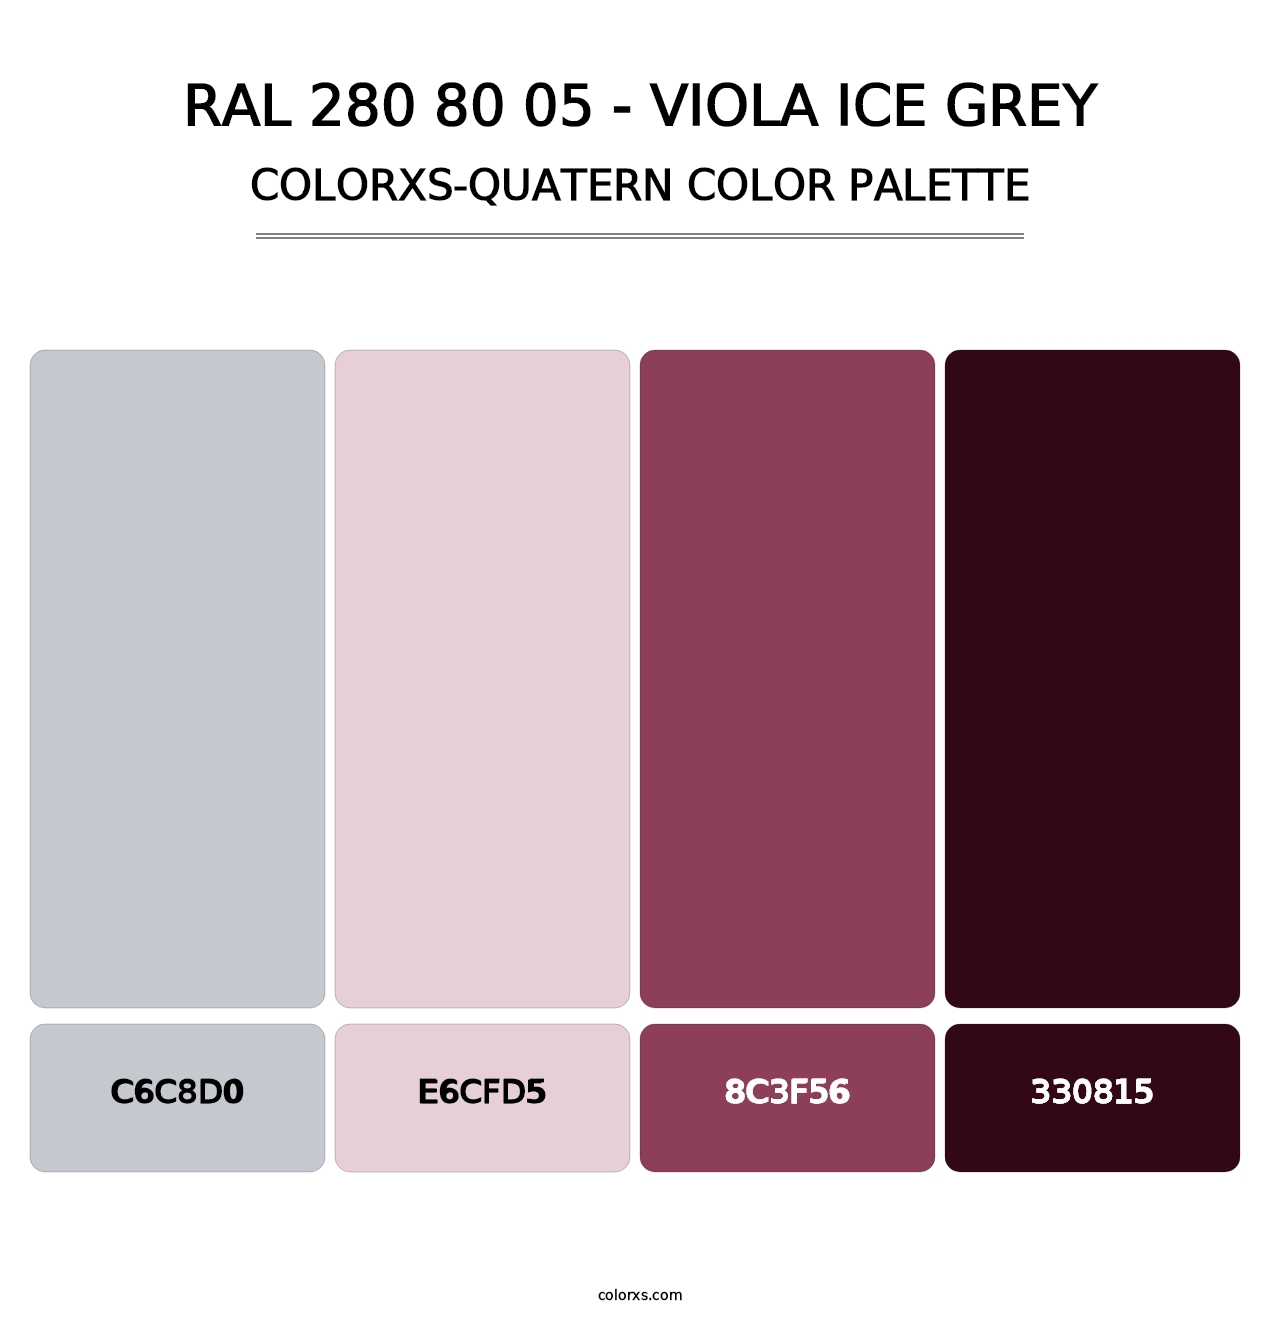 RAL 280 80 05 - Viola Ice Grey - Colorxs Quatern Palette